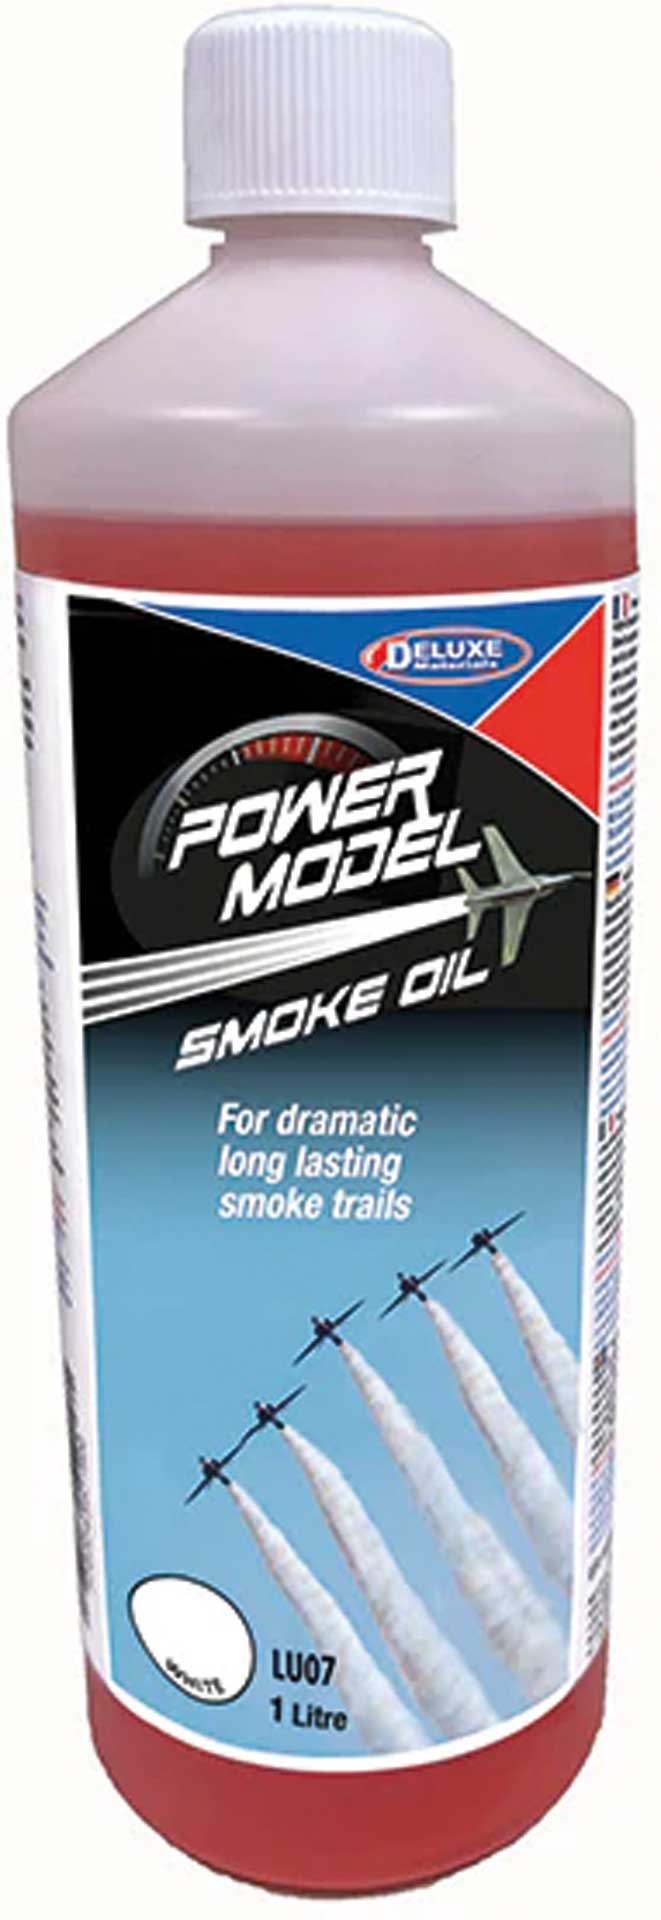 DELUXE PowerModel Smoke Oil 1 litre